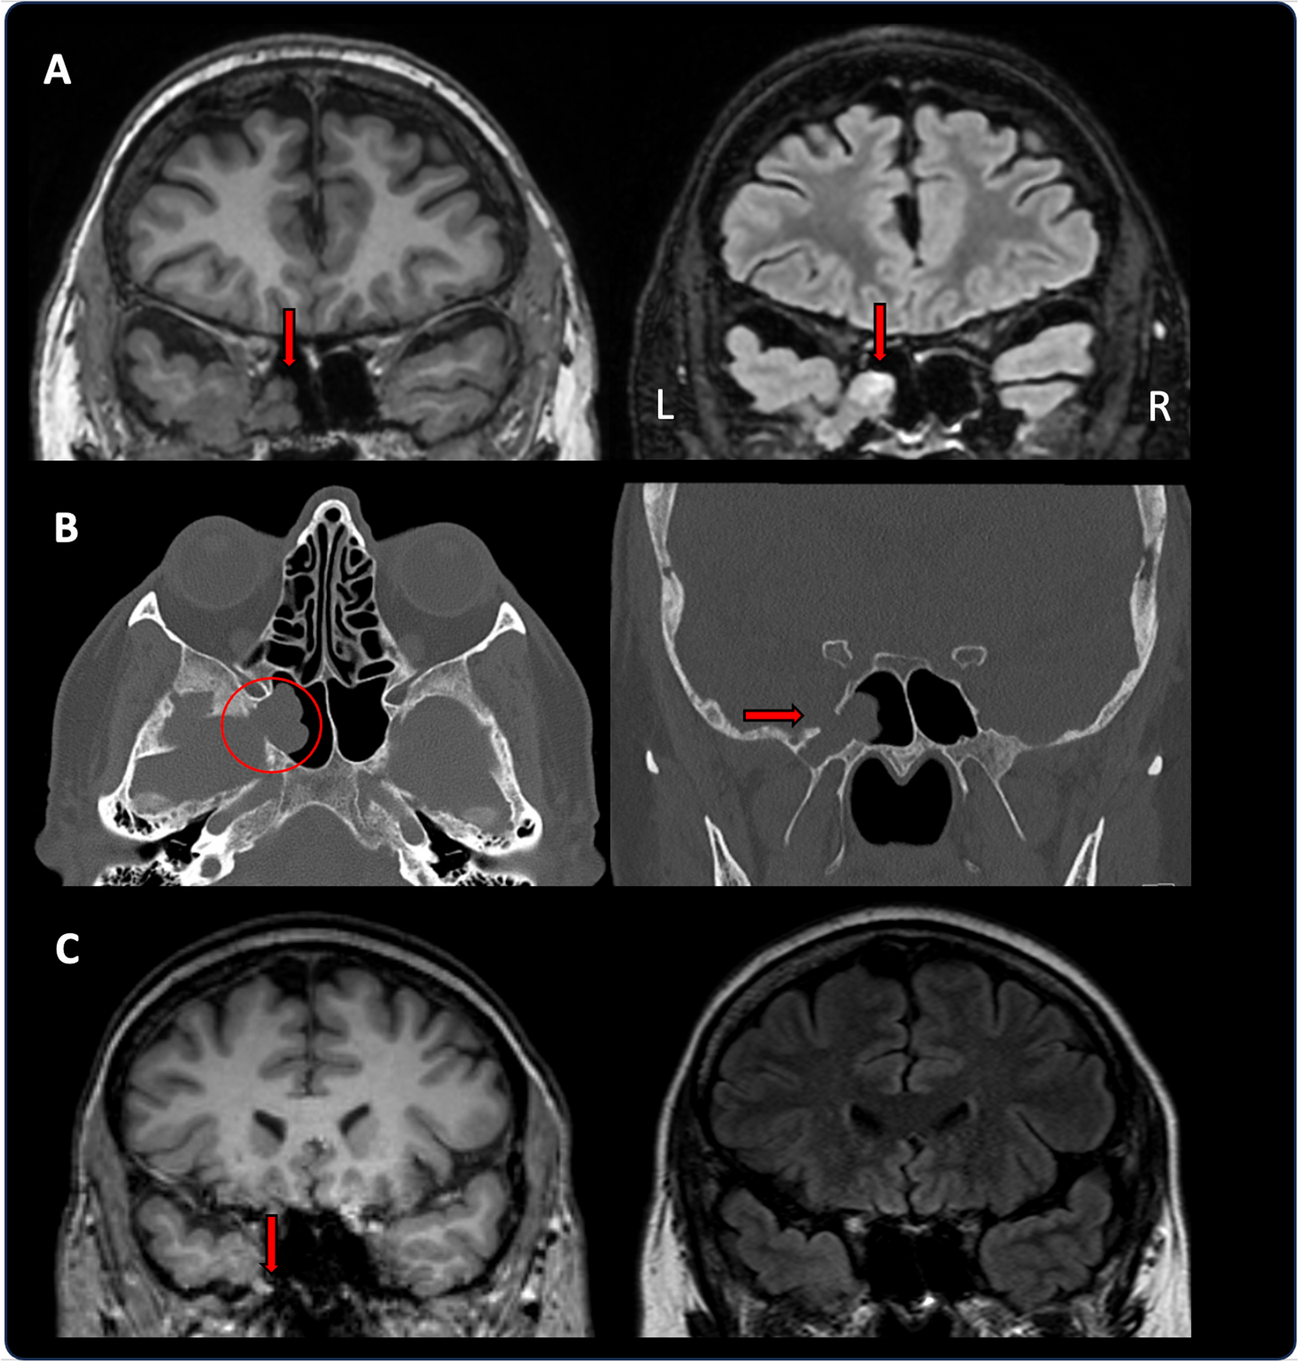 When the brain moves away: a case of sphenoidal sinus encephalocele